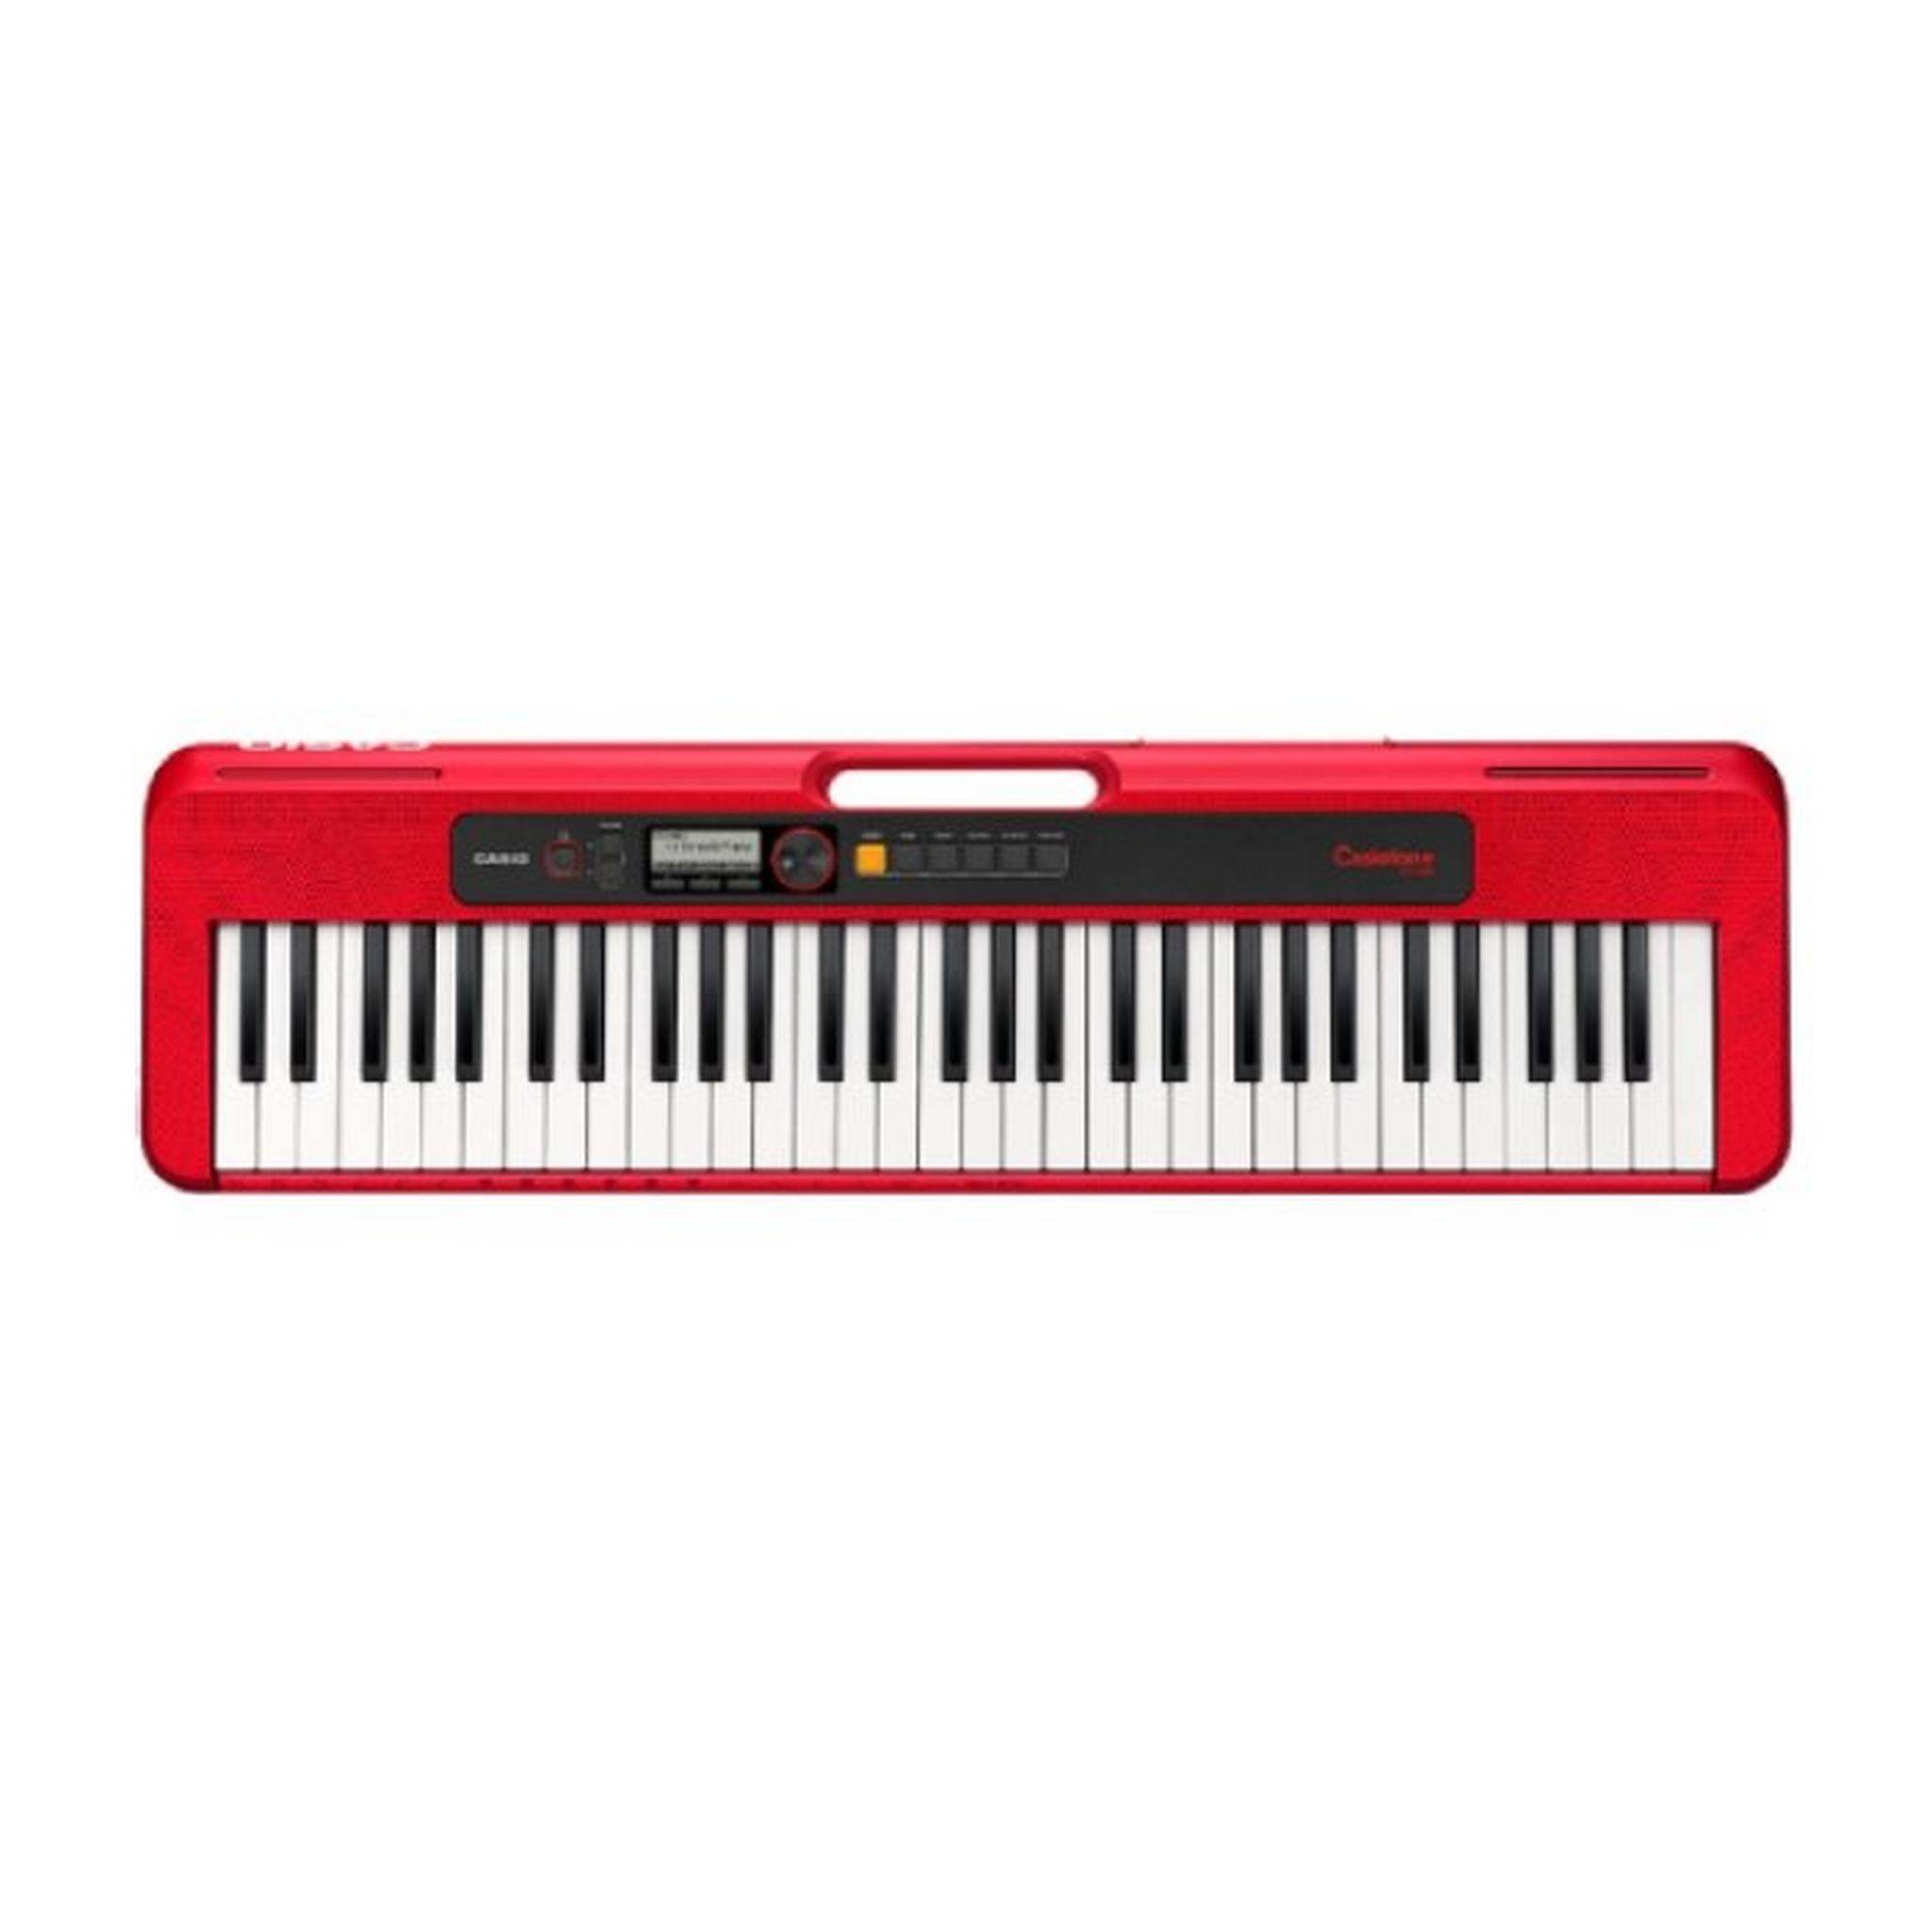 Casio Casiotone CT-S200 61 Key Keyboard - Red